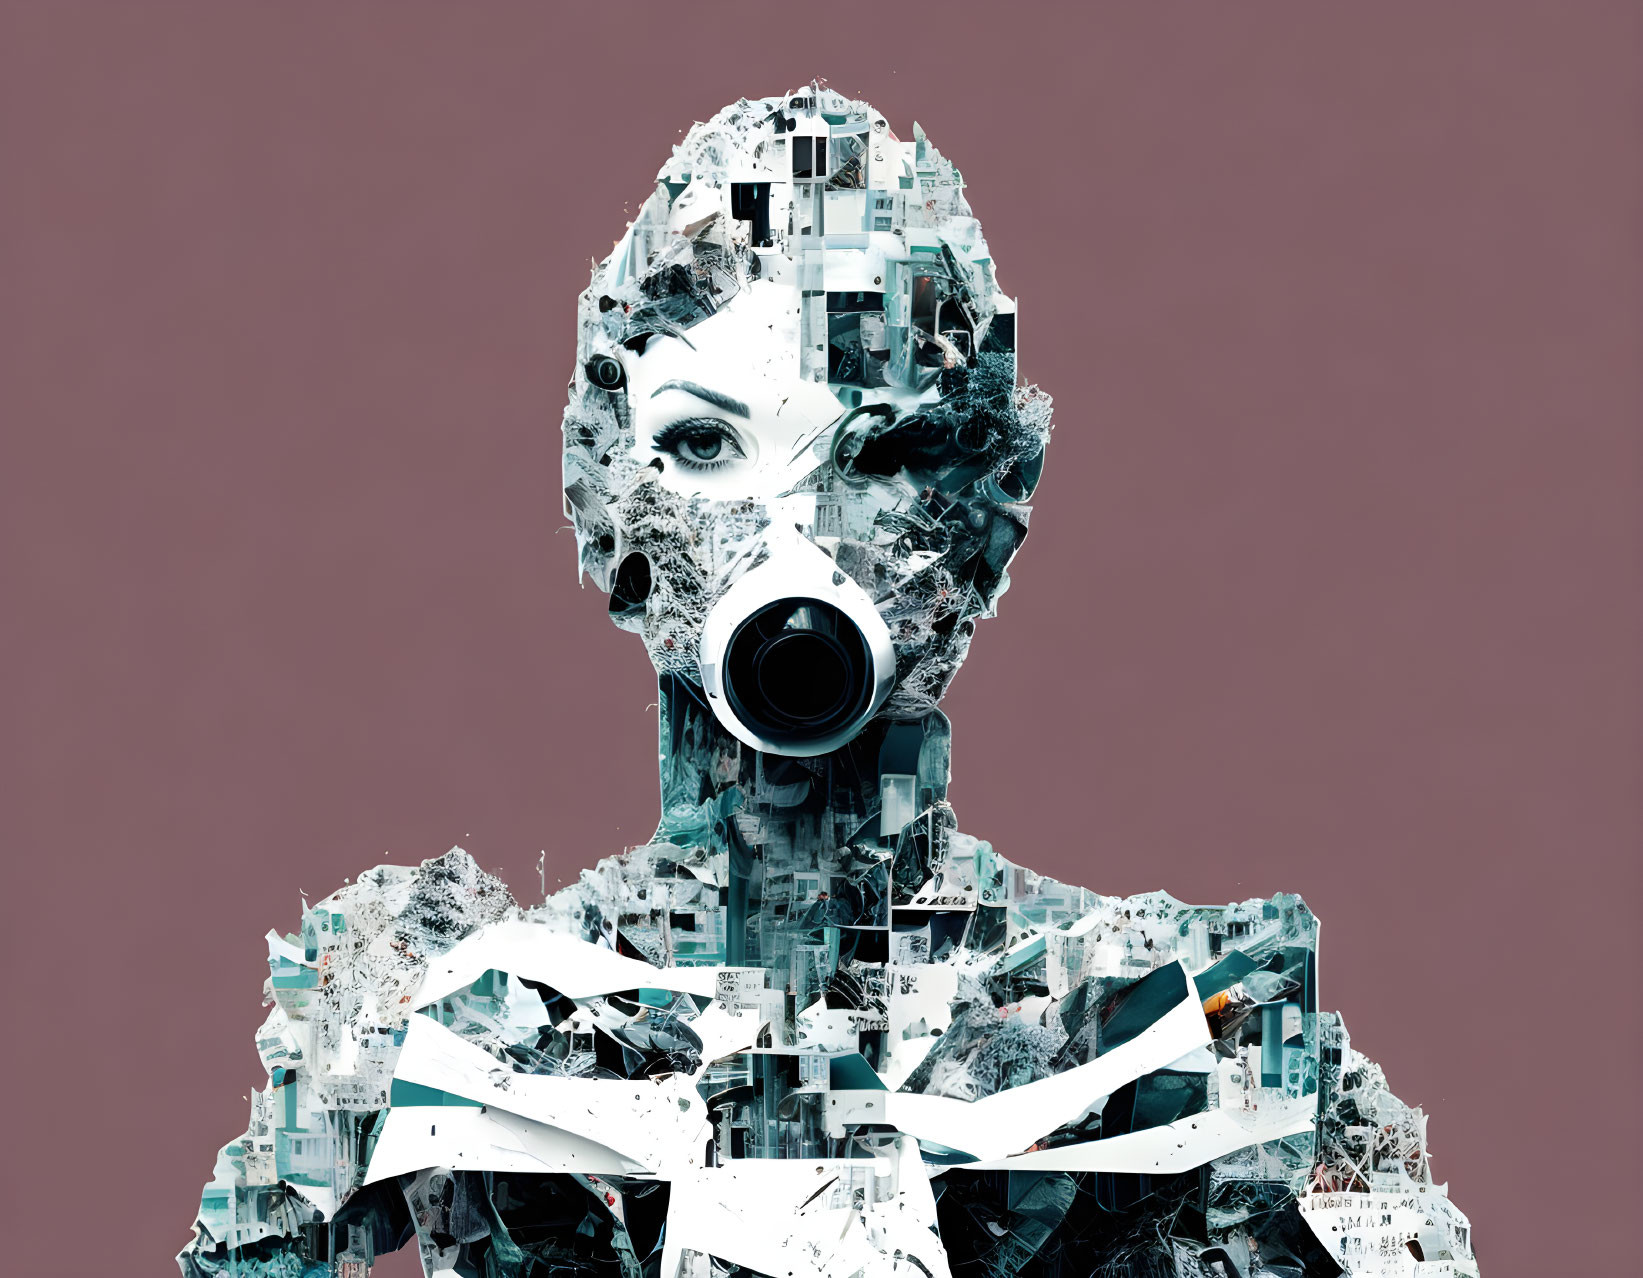 Digital artwork of female figure with fragmented features symbolizing robotic entity